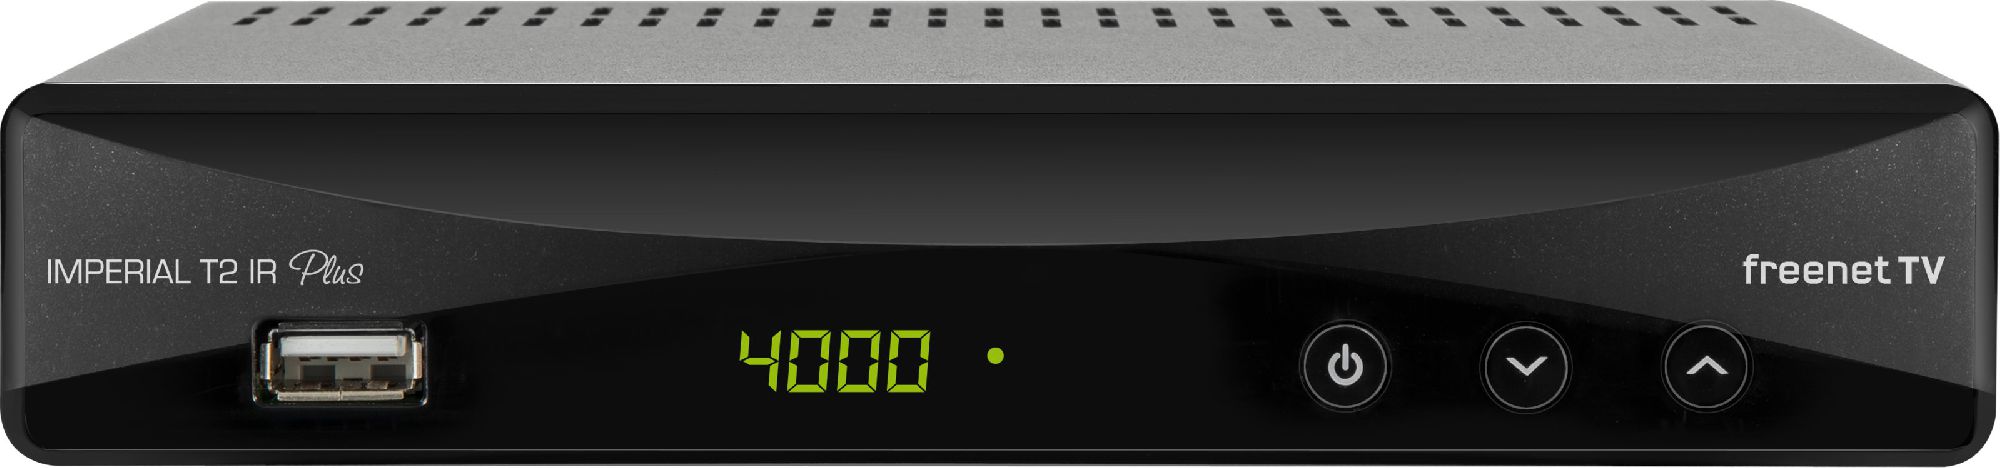 Telestar IMPERIAL T2 IR Plus DVB-T2 HDTV Receiver black resīveris